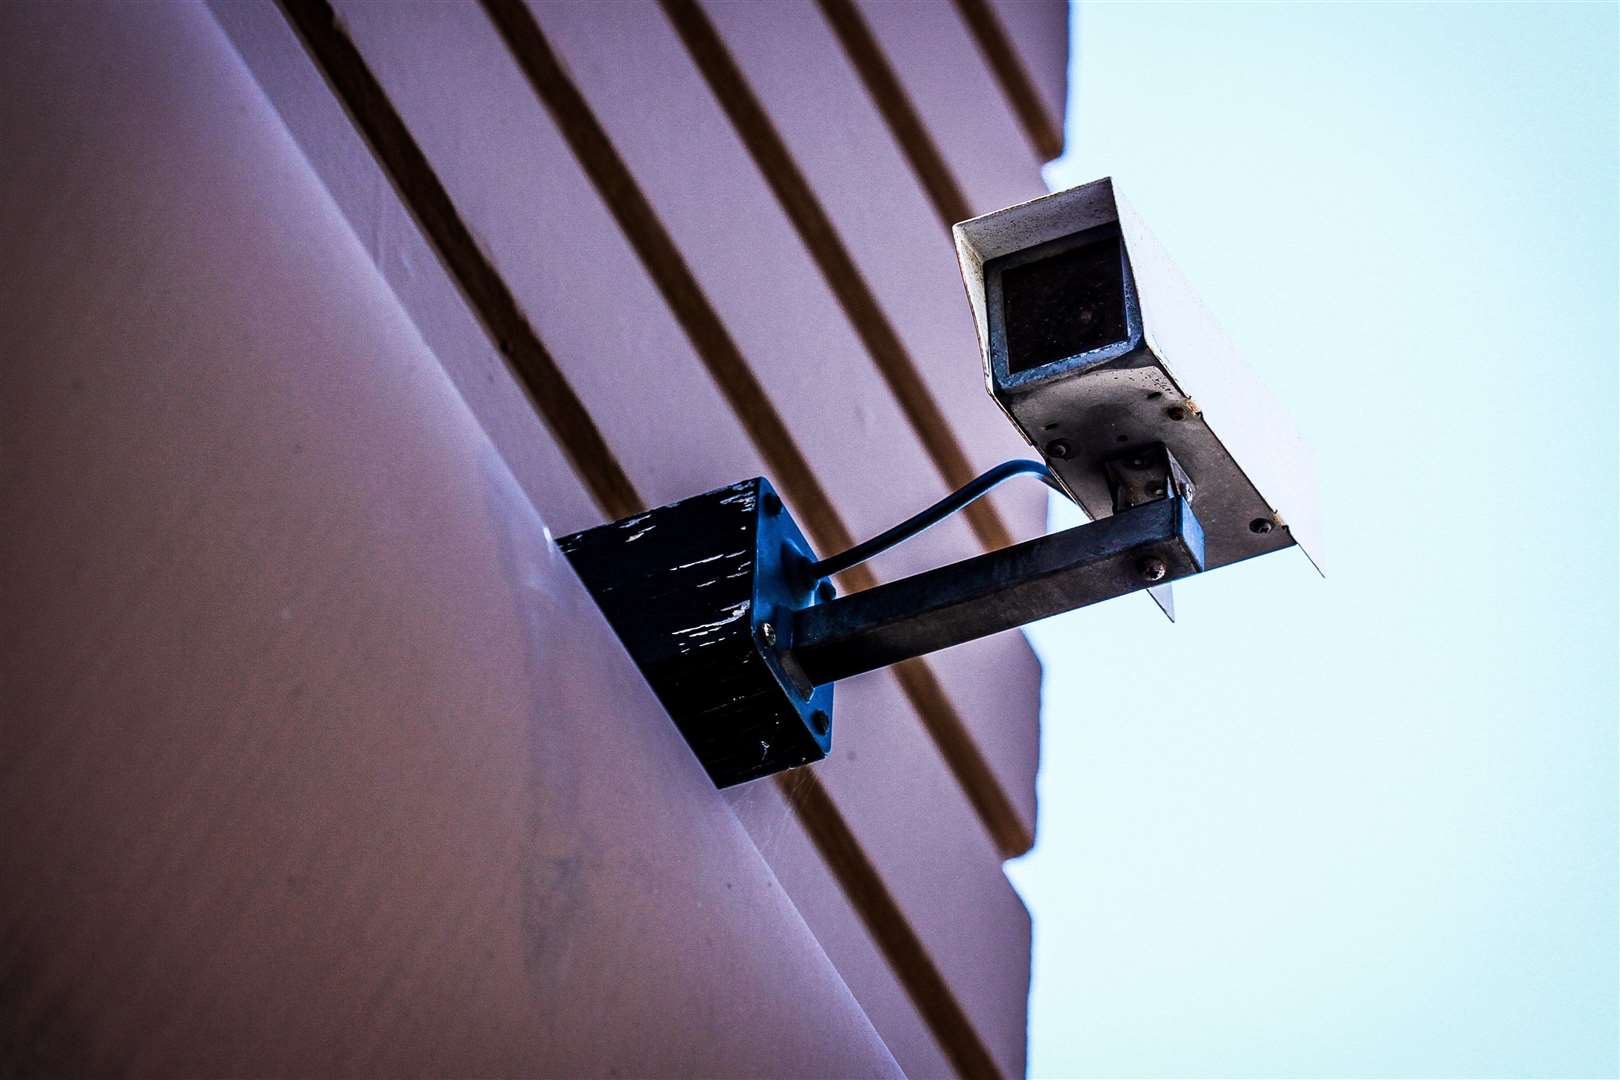 Stock image of a CCTV camera. (13984084)